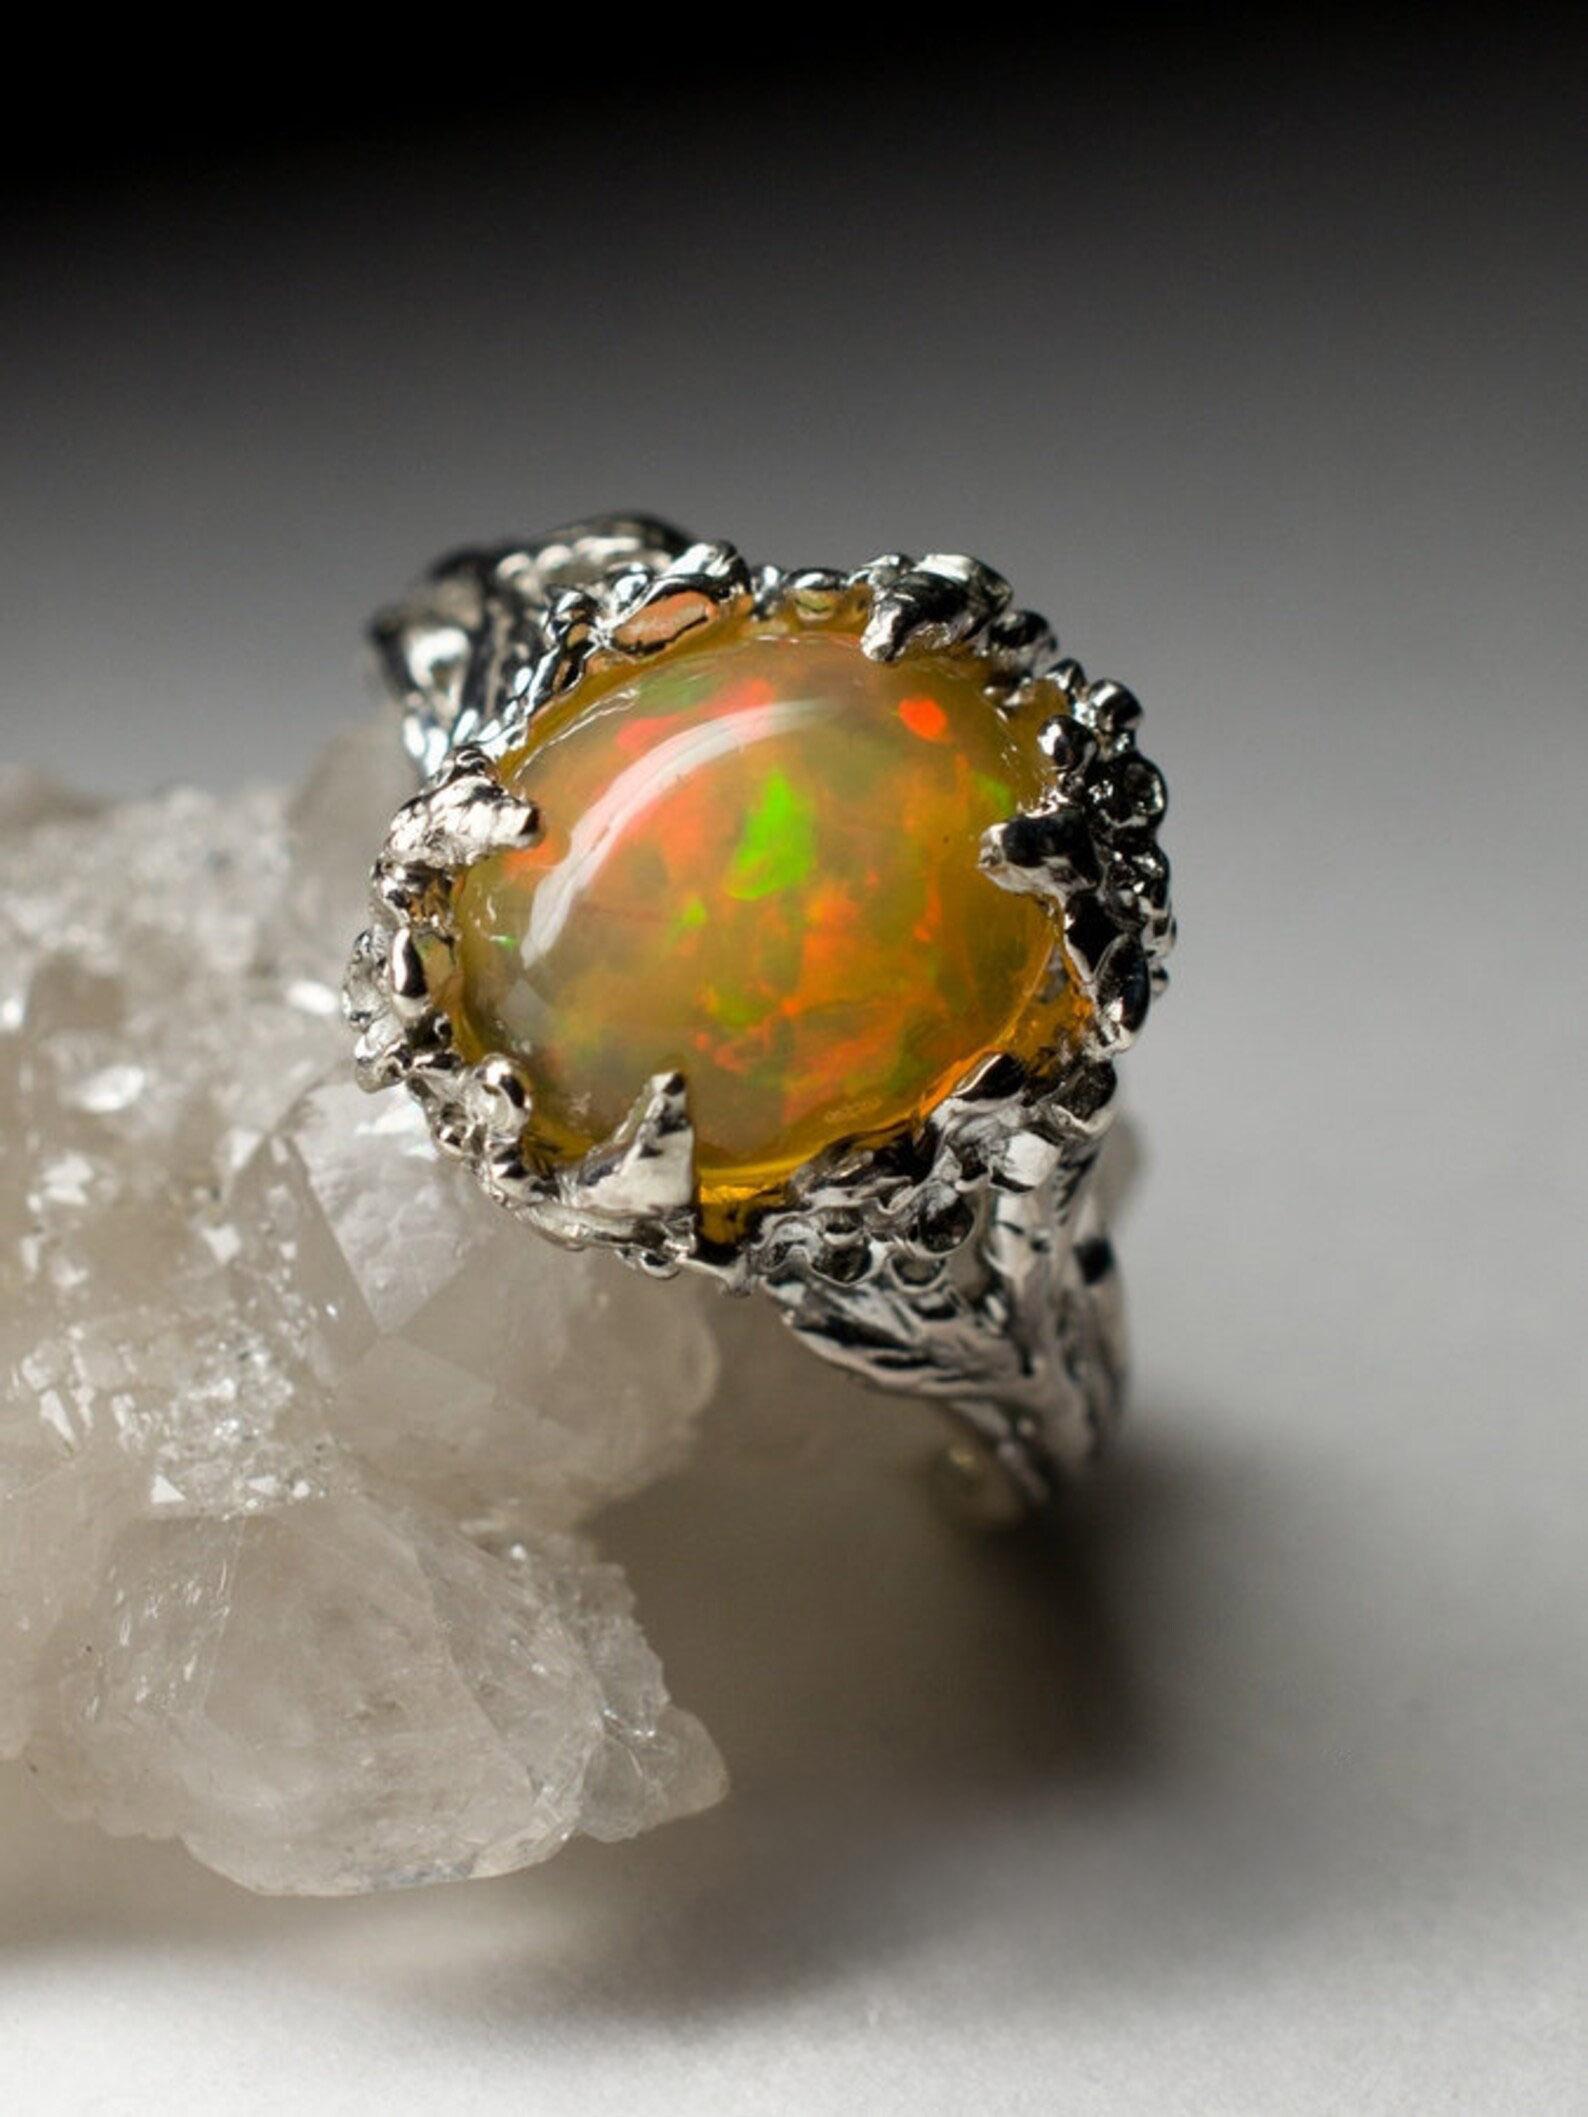 Vintage Silver Opal ring 
gemstone origin - Ethiopia
ring size - 7.5 US 
ring weight - 4.72 grams
gem size is 0.28 x 0.51 x 0.59 in / 7 х 13 х 15 mm